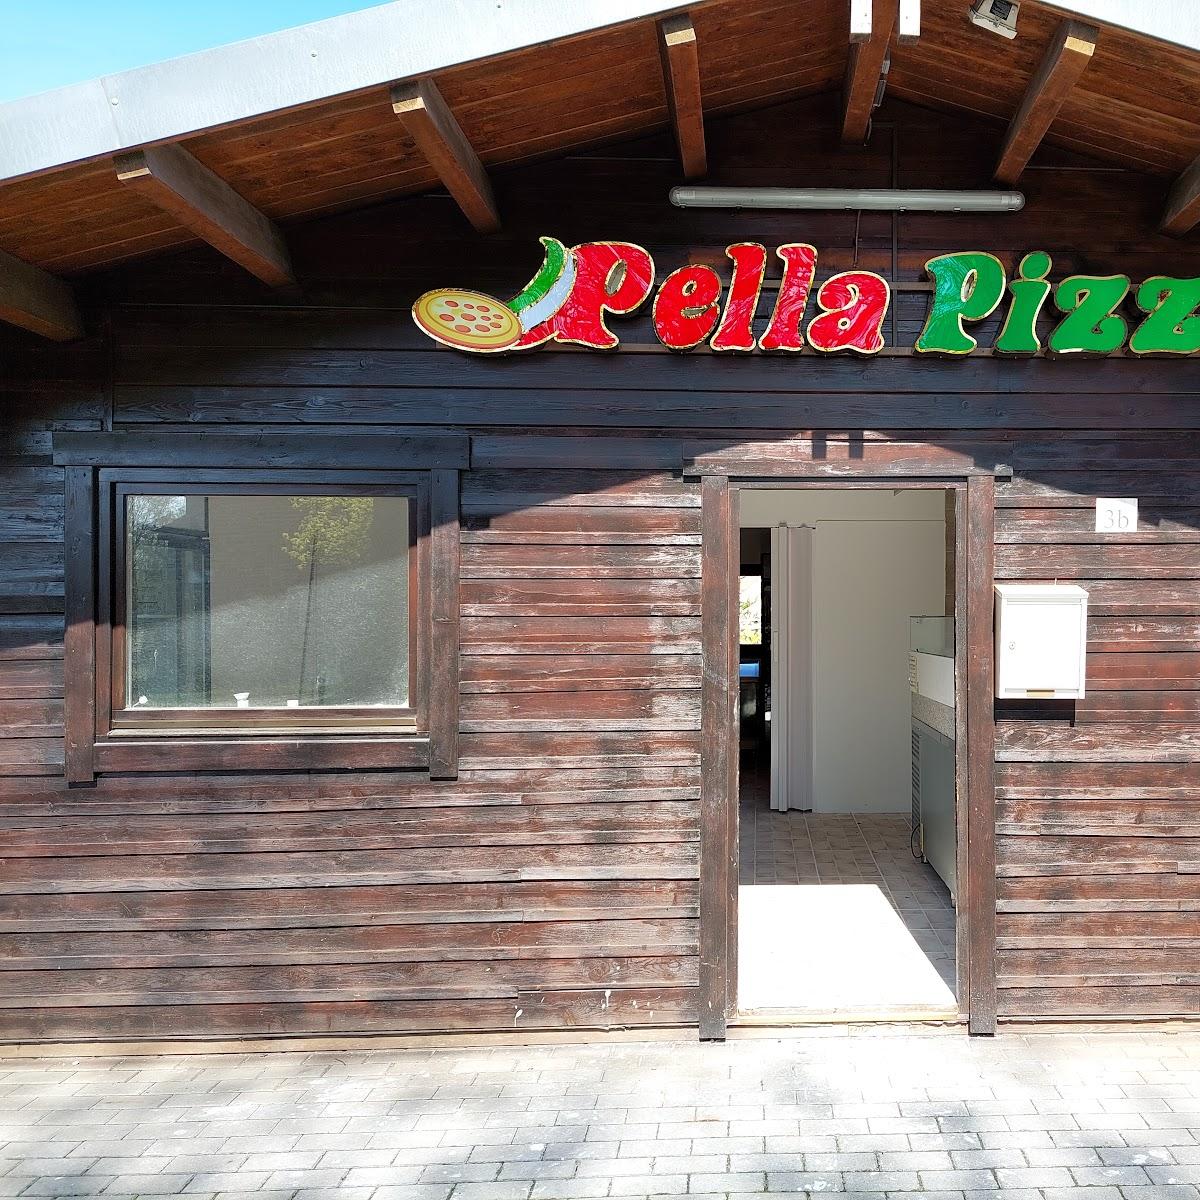 Restaurant "Pella Pizza" in Rinteln